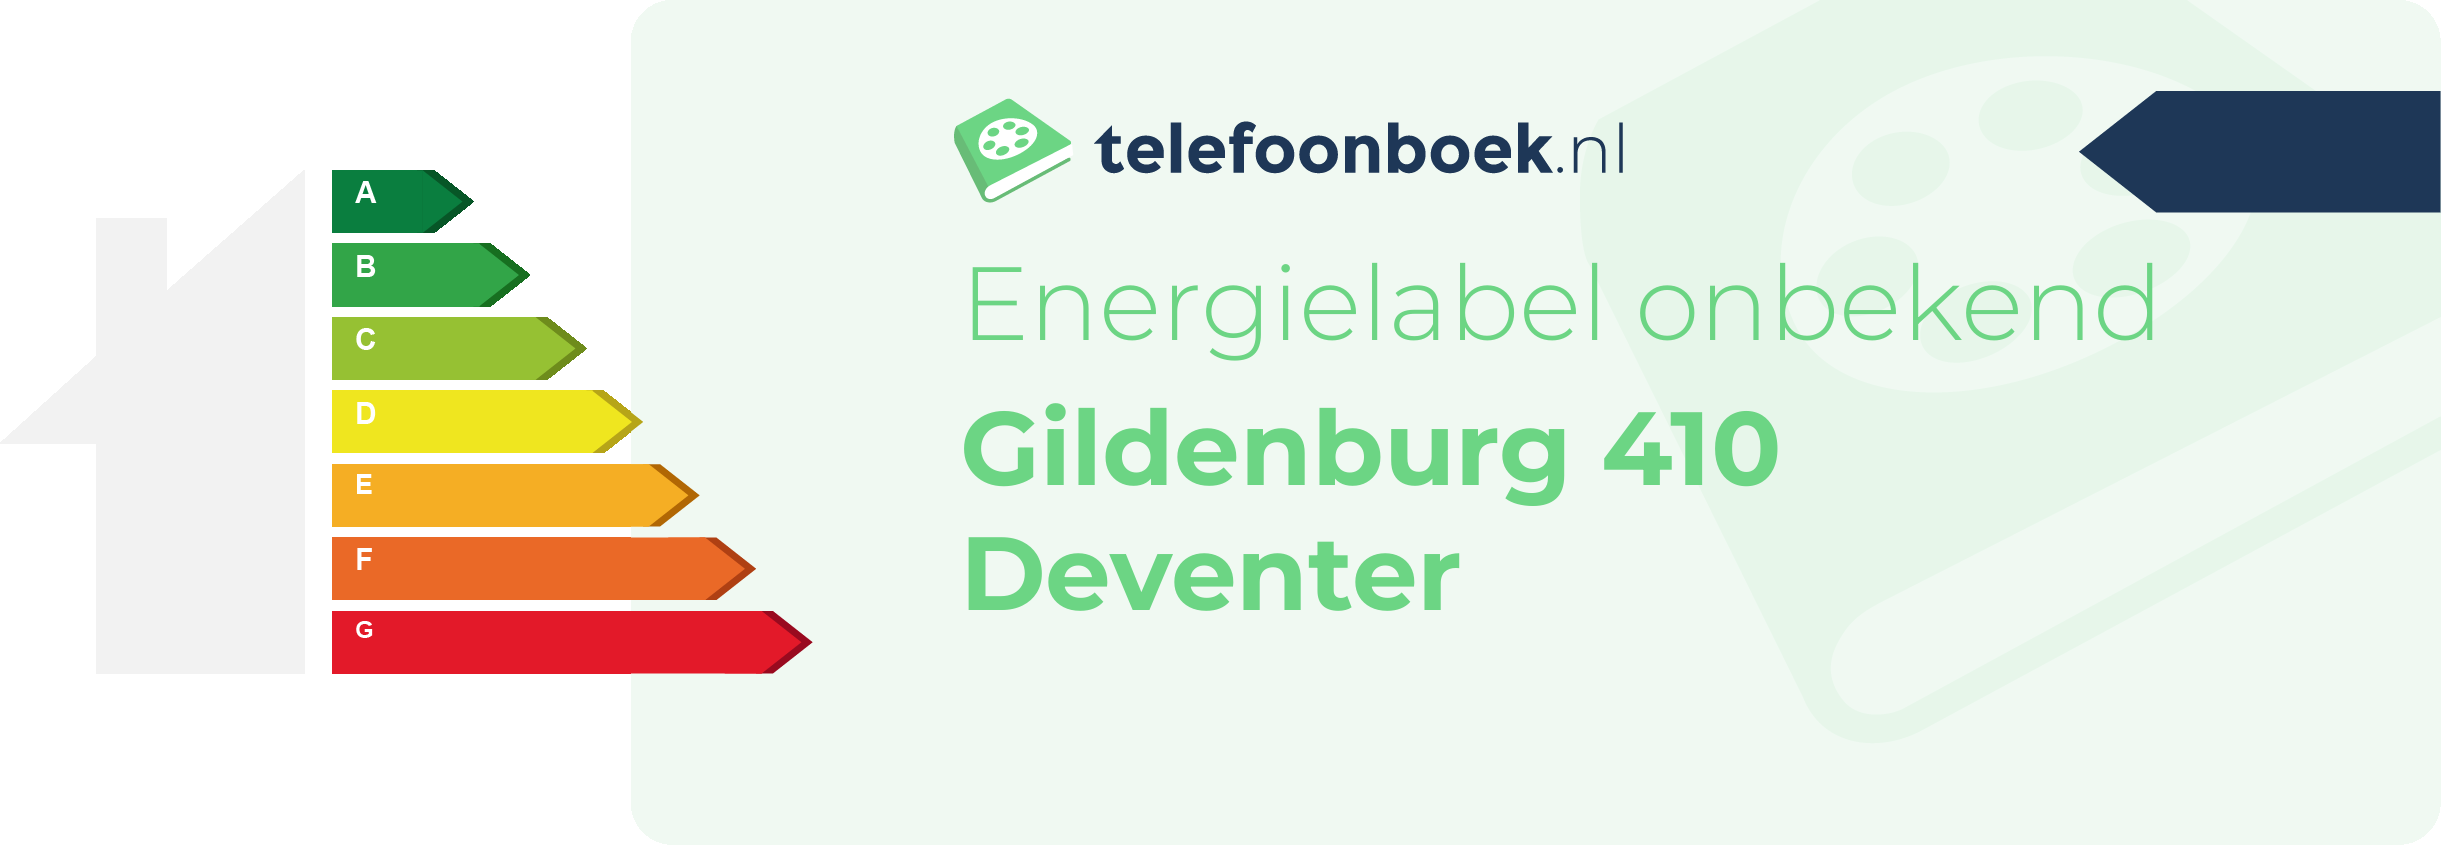 Energielabel Gildenburg 410 Deventer